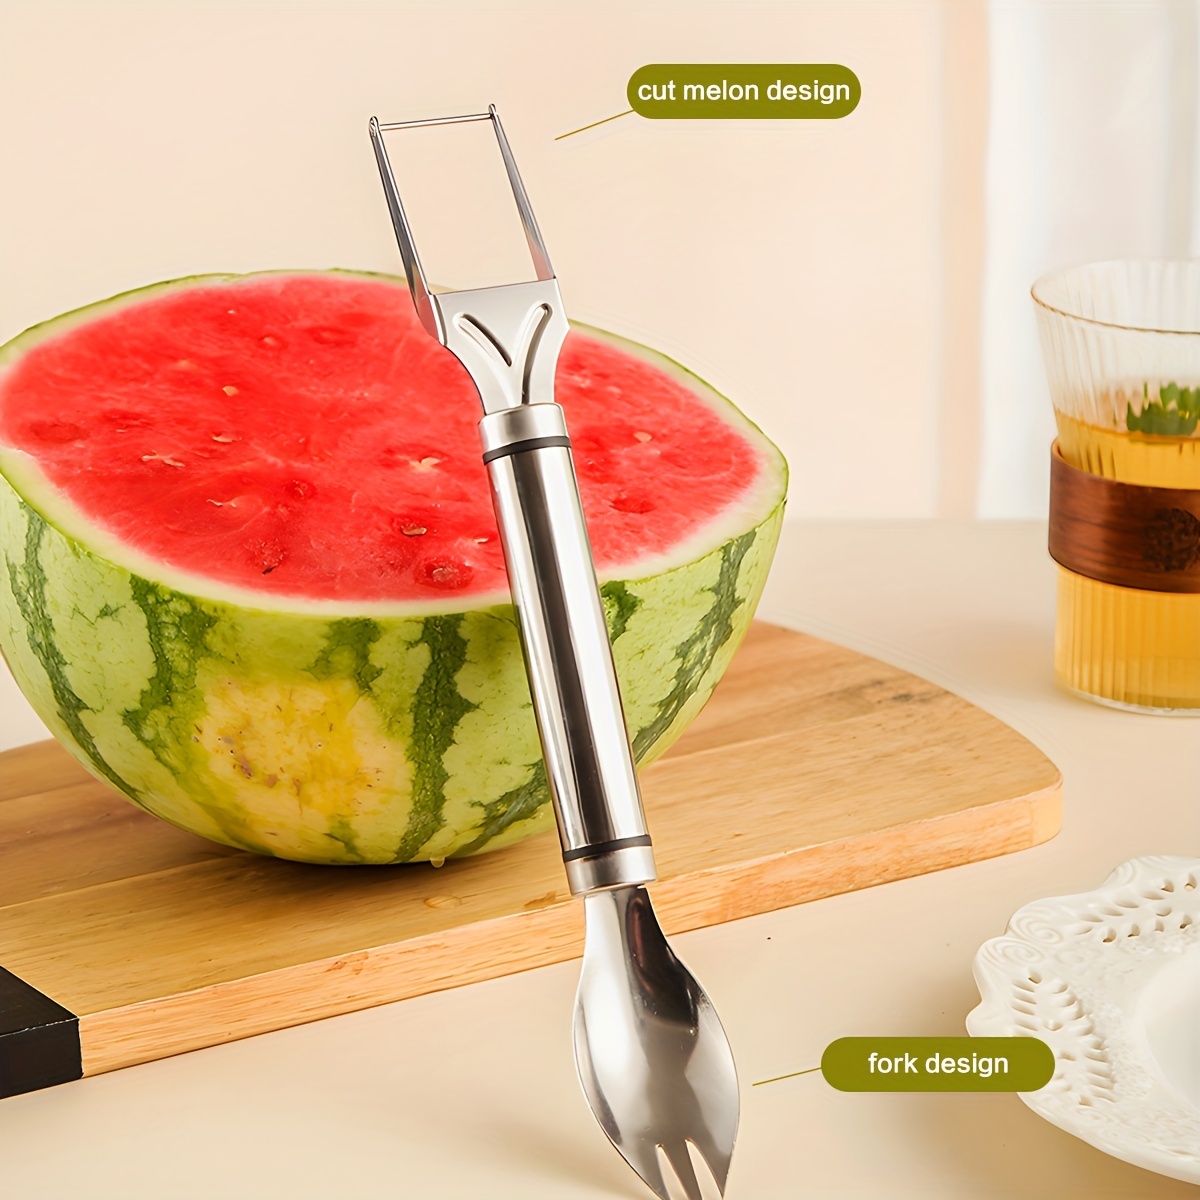 Stainless Steel Watermelon Cube Cutter Quickly Safe Watermelon Knife,Fun Fruit Salad Melon Cutter